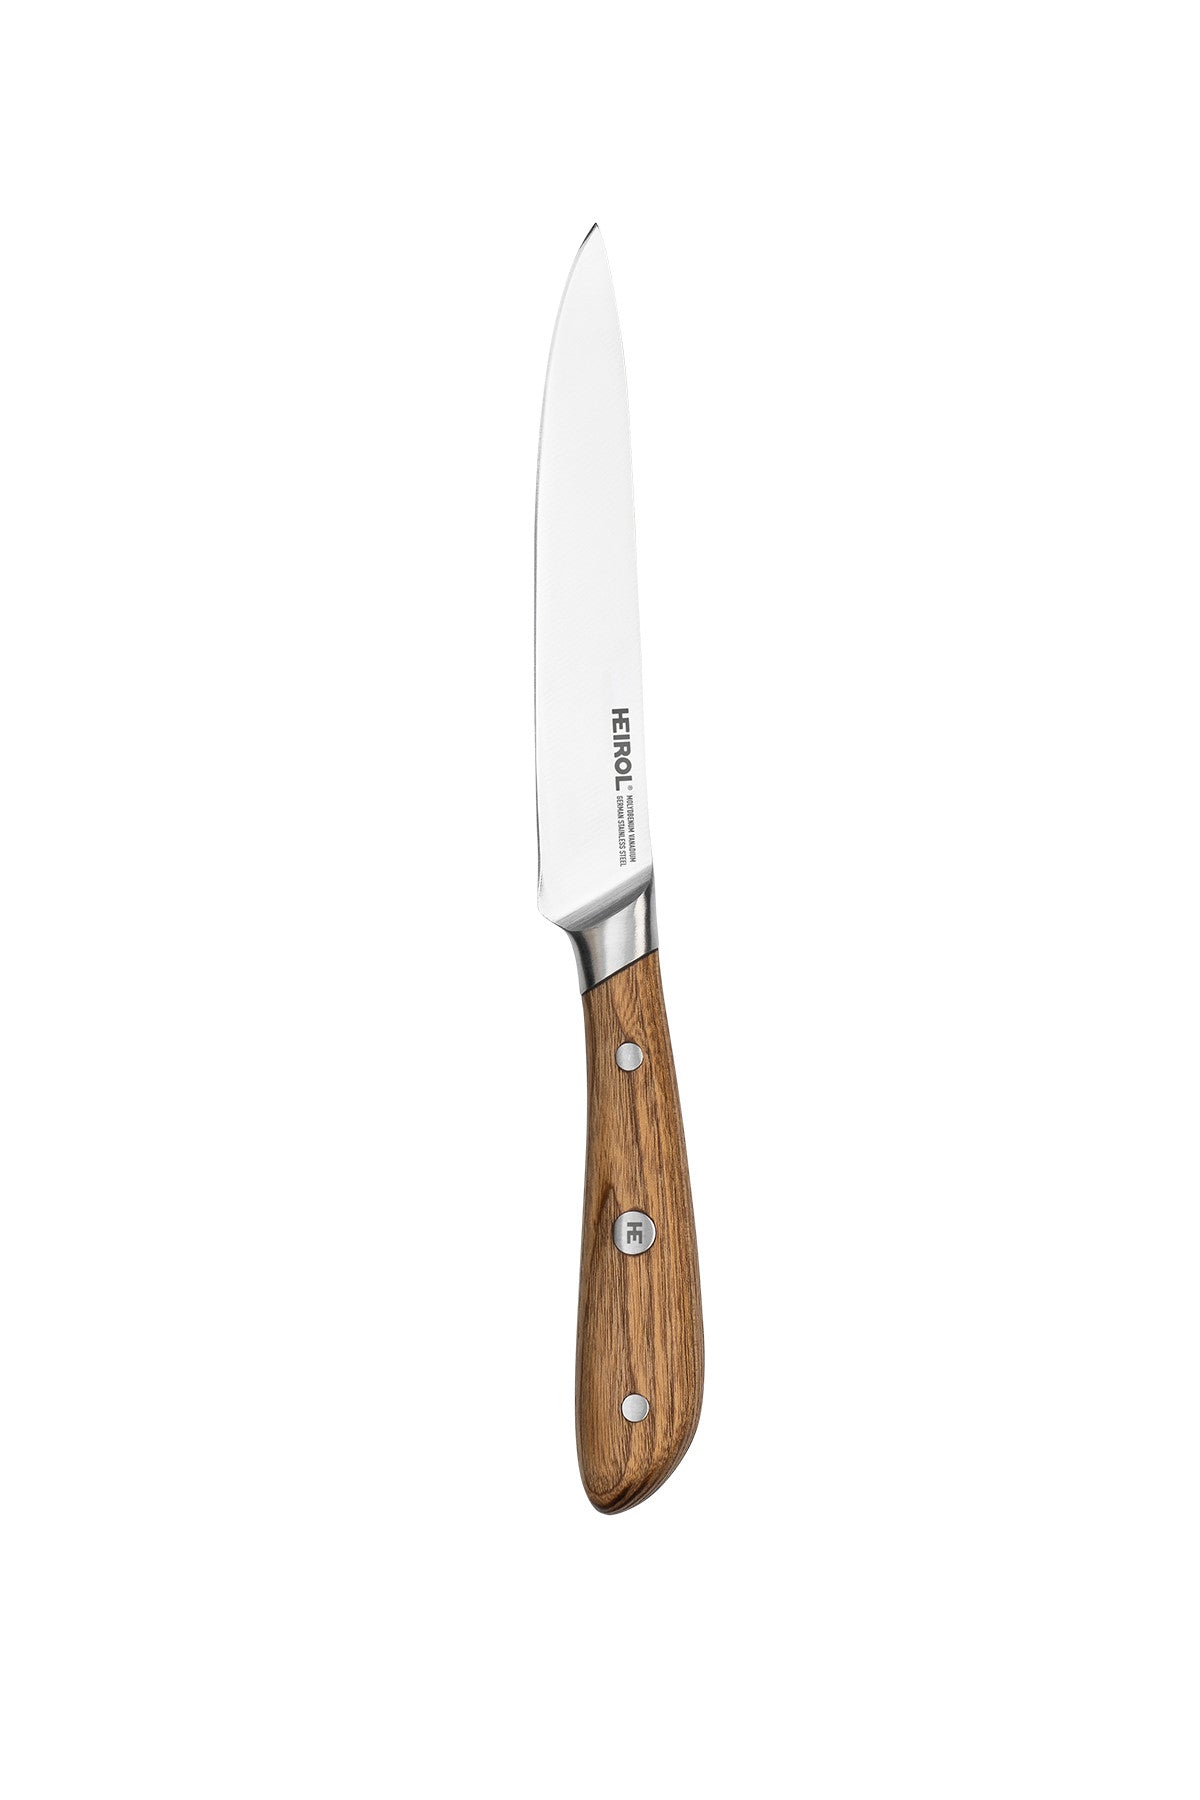 UTILITY KNIFE 13 cm Albera